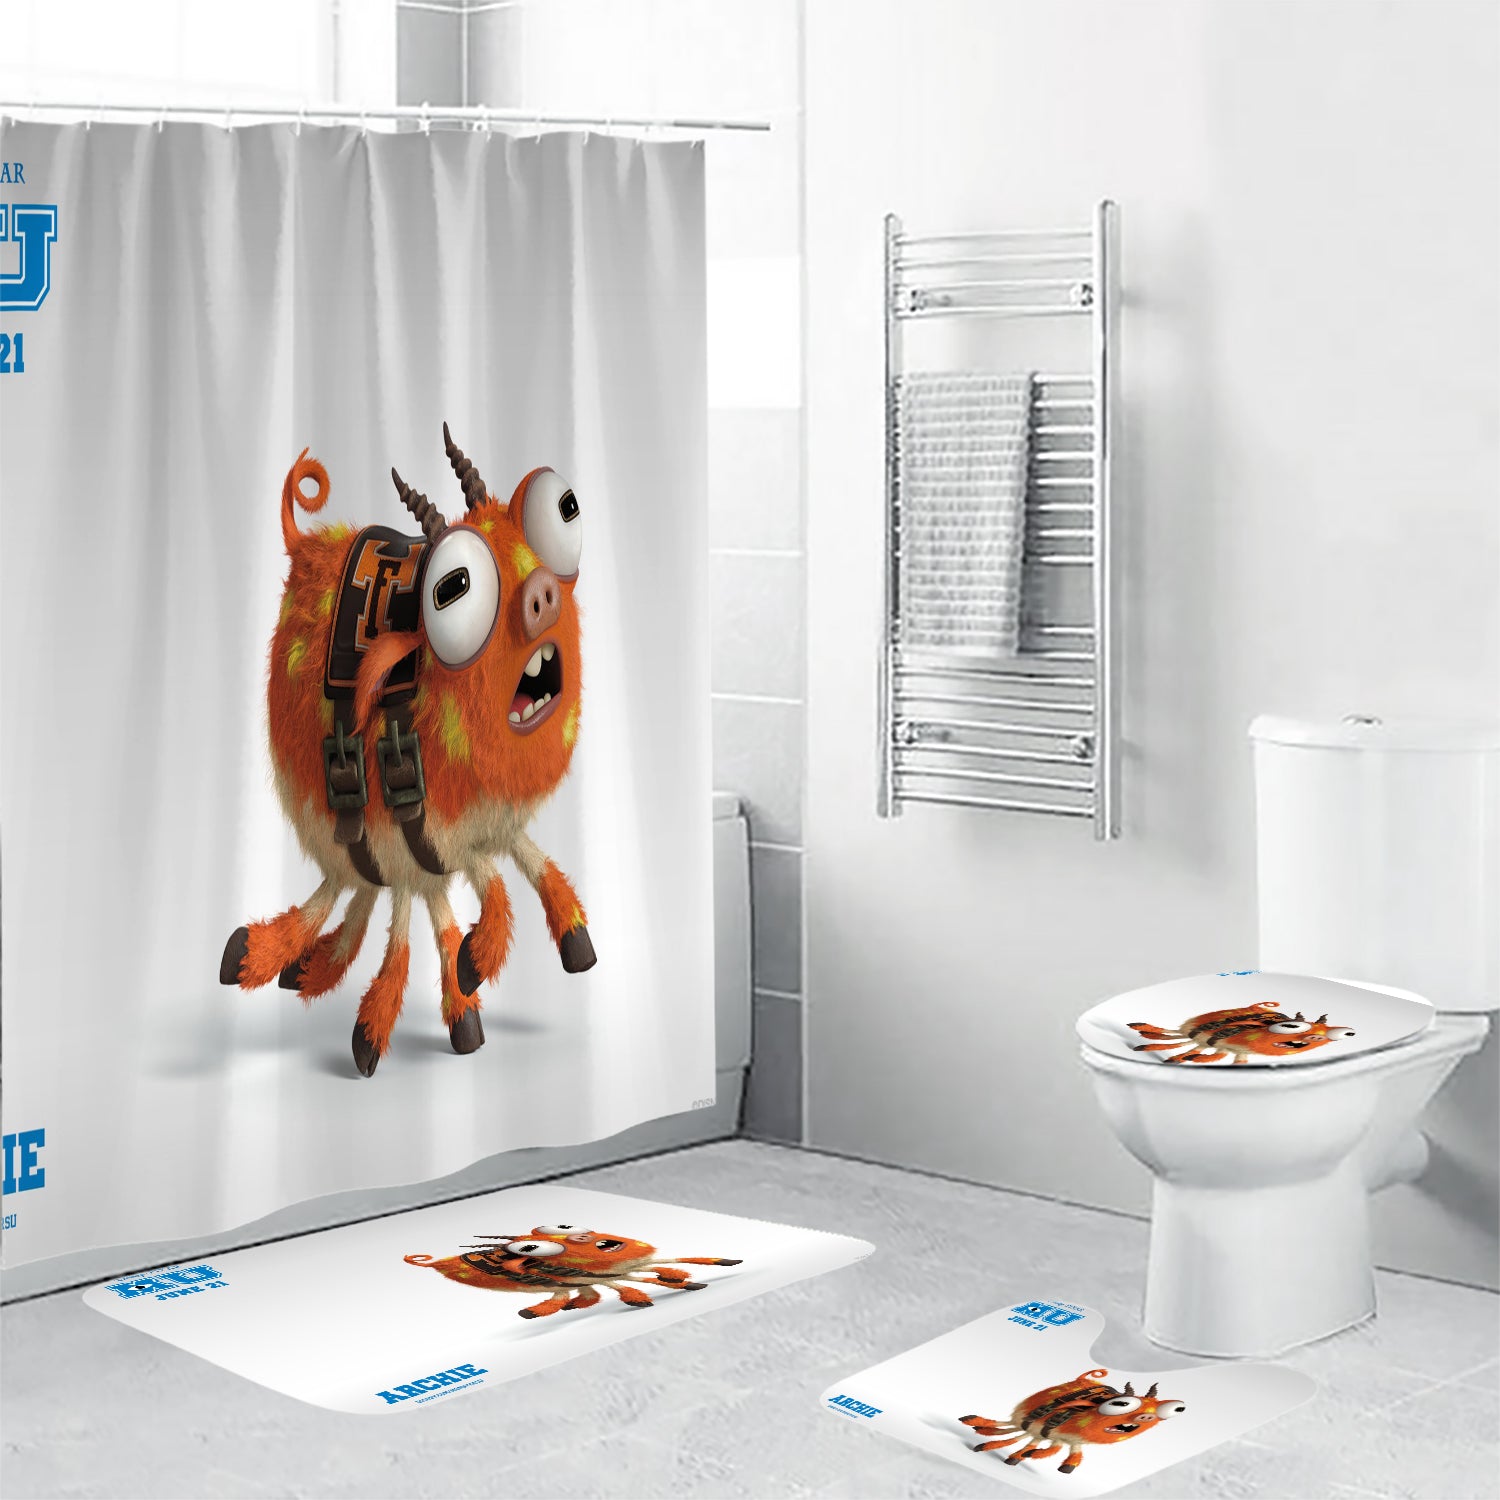 Characters Archie Monsters Inc Monsters University Movie Disney Pixar Waterproof Shower Curtain Non-Slip Toilet Lid Cover Bath Mat - Bathroom Set